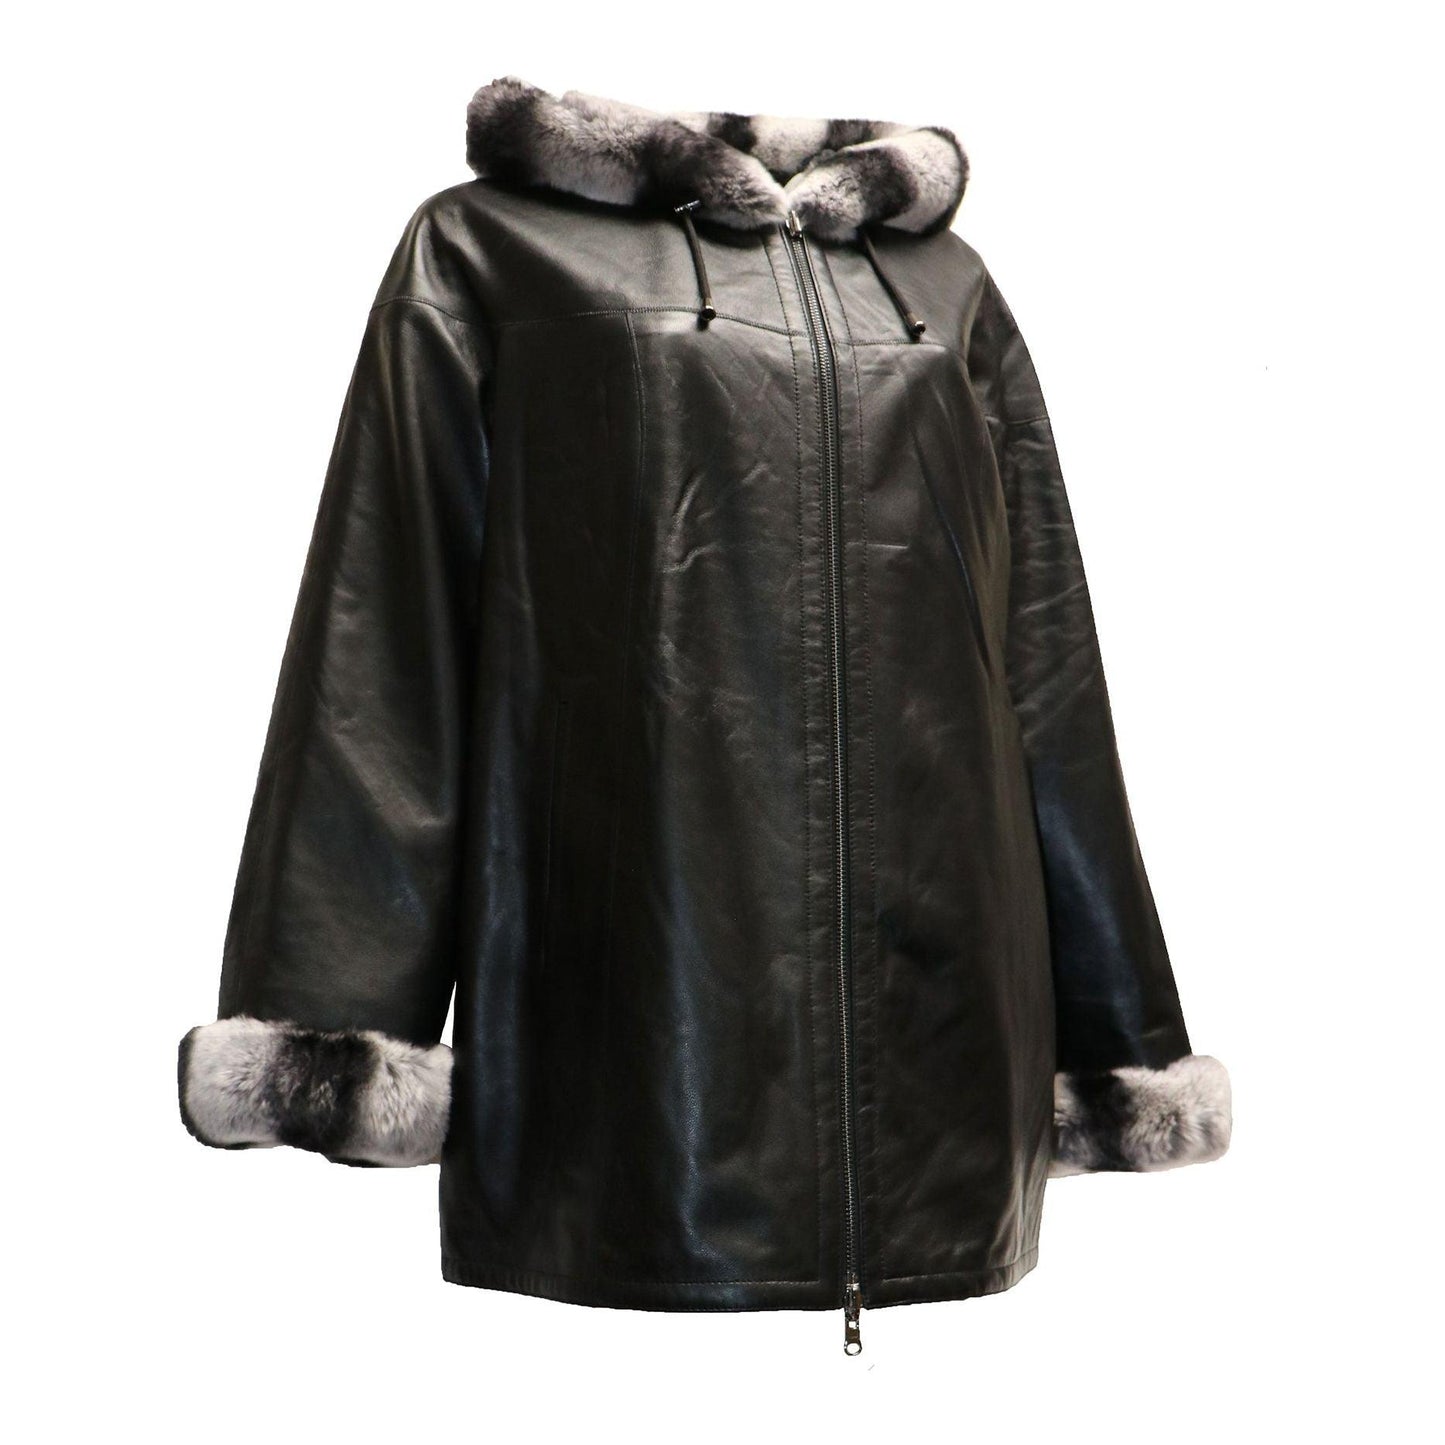 Barya New York Women's Reversible Leather Jacket - Zooloo Leather